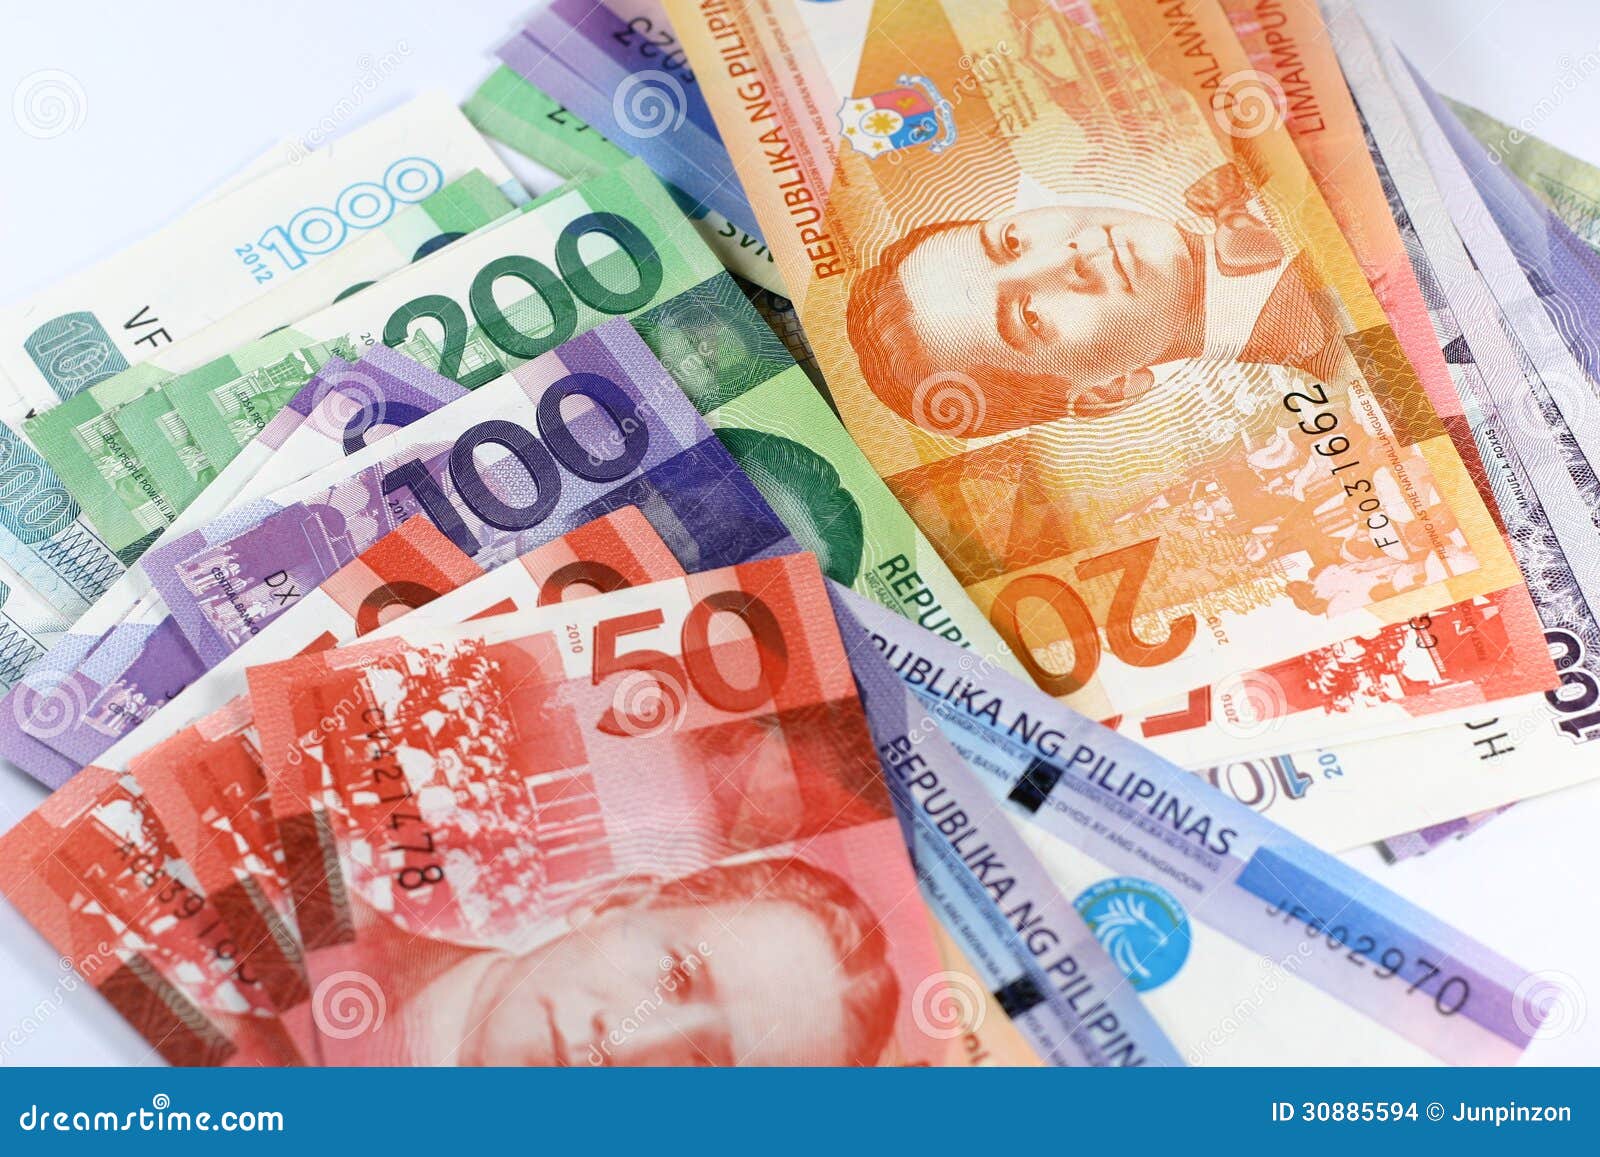 clipart philippine money - photo #28